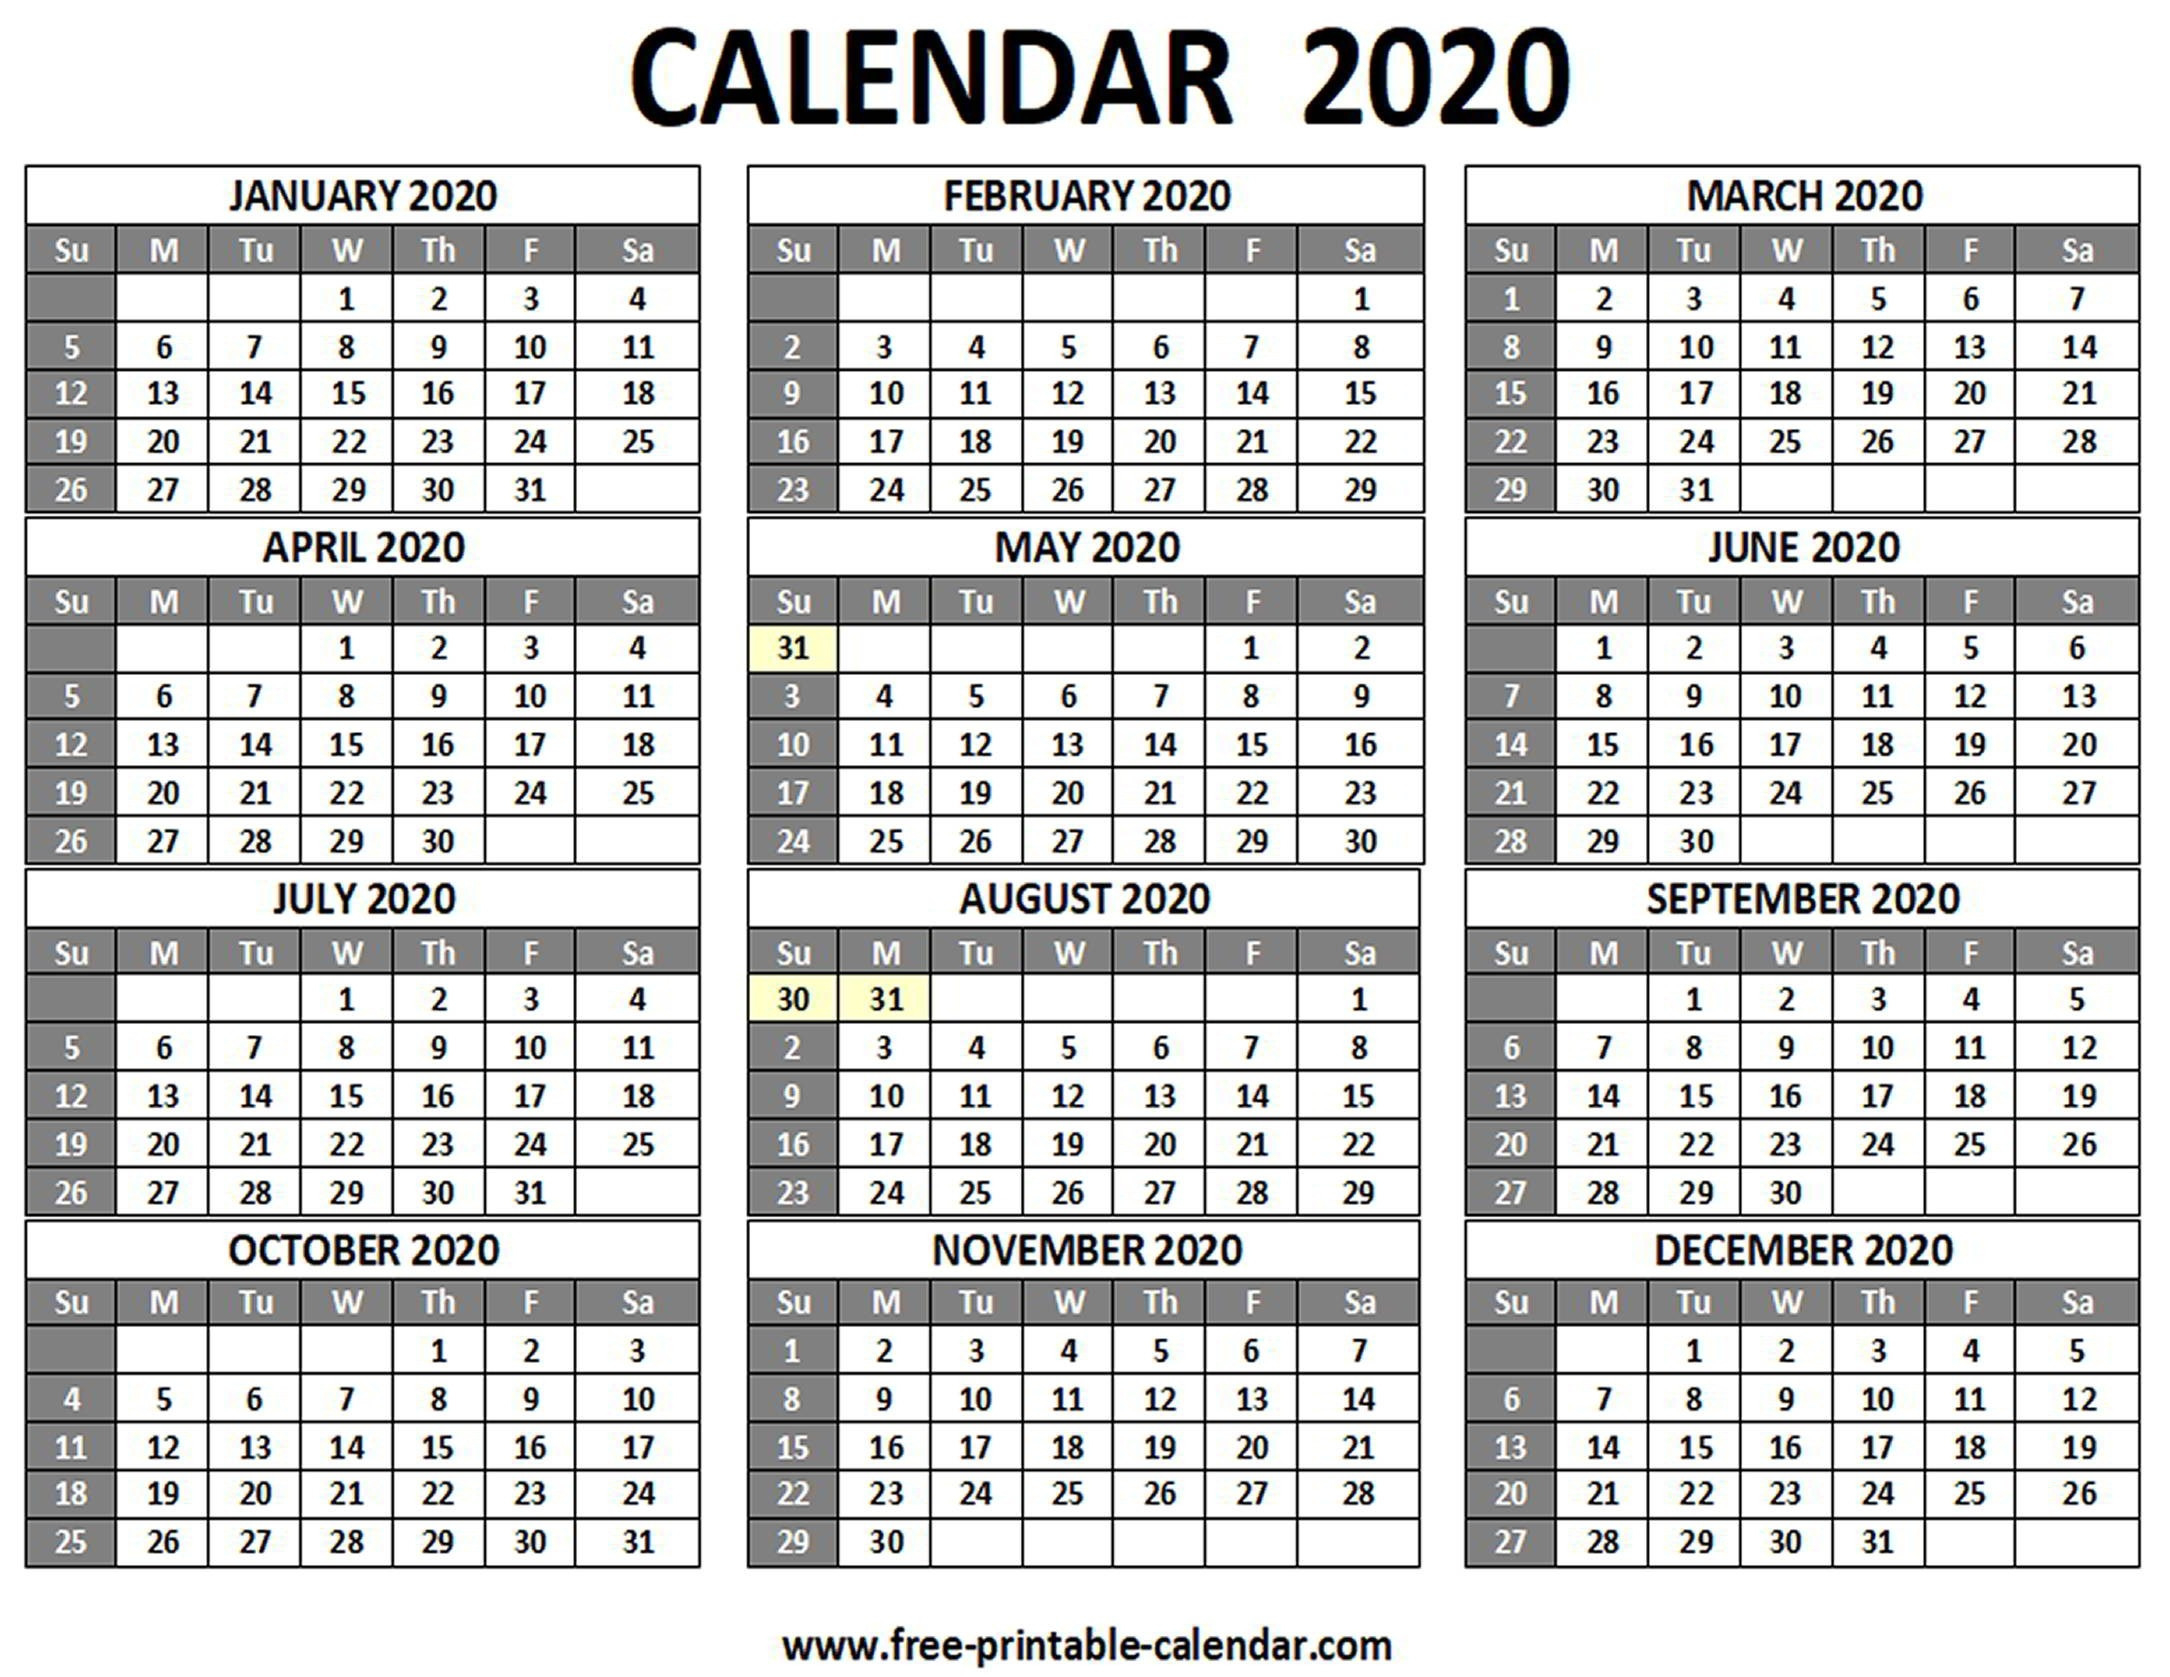 Full Page Printable 2020 Calendar - Template Calendar Design  Depo Preva Schedule